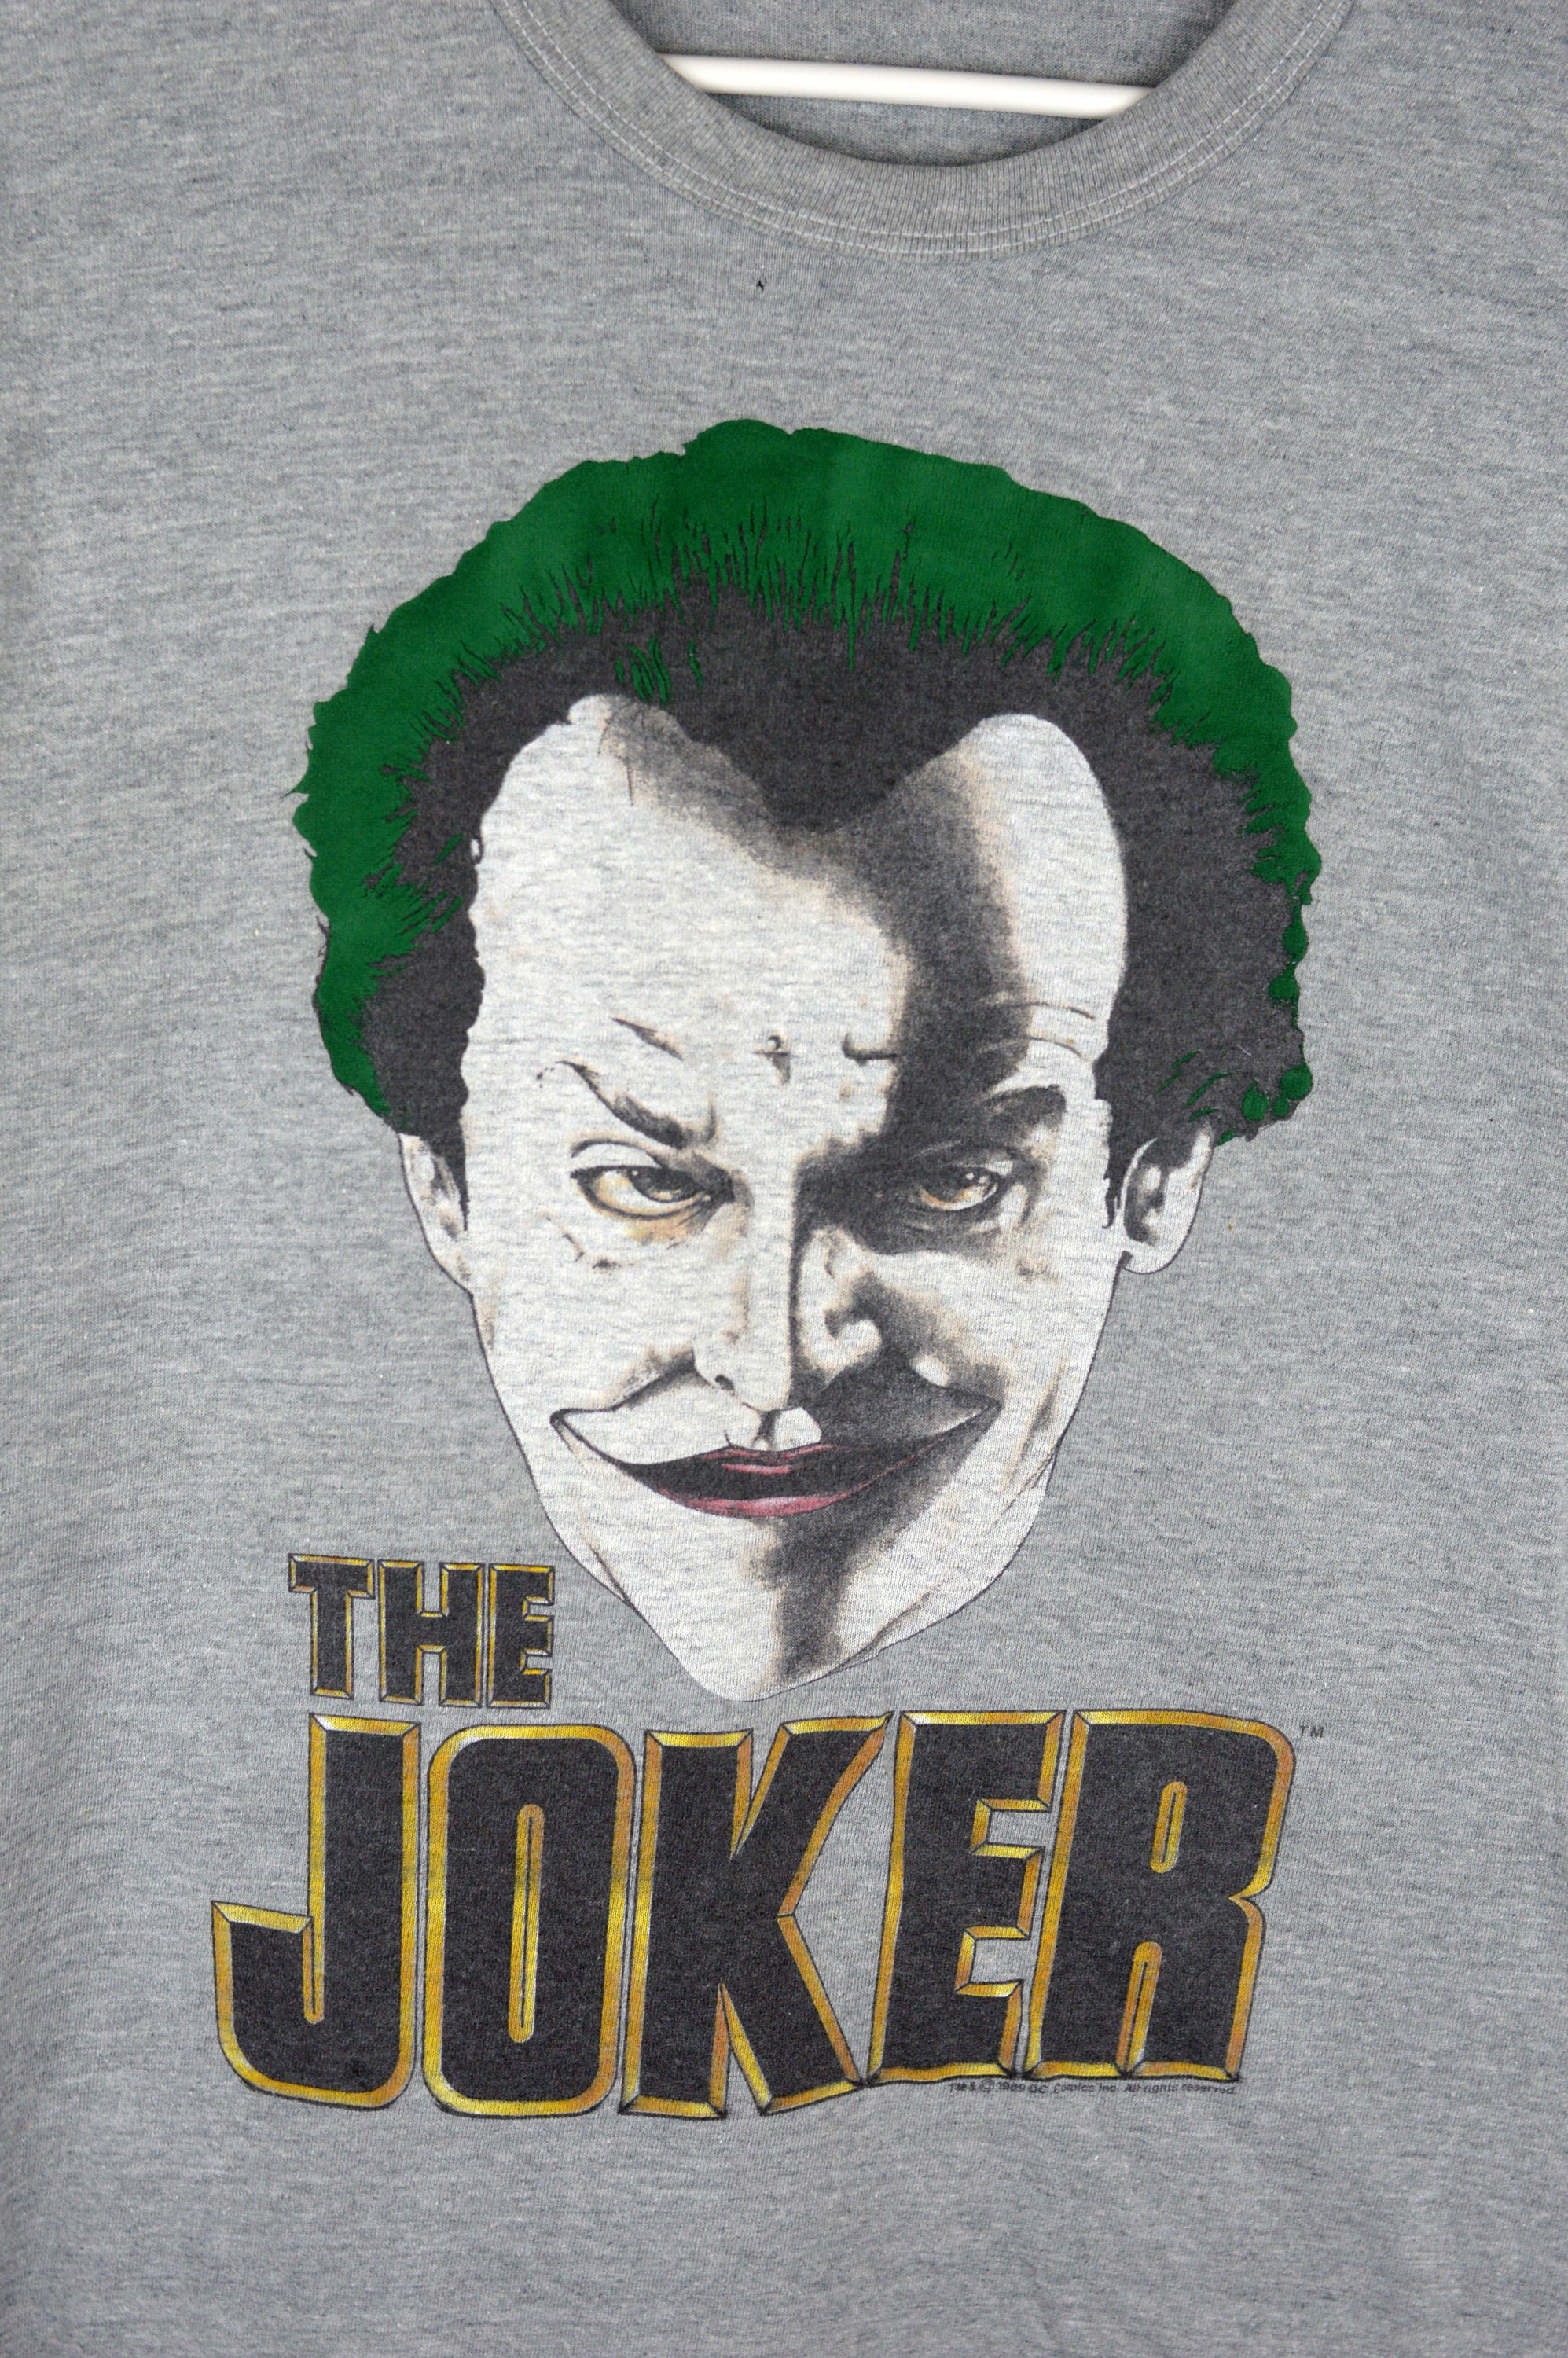 Clothes, Shoes & Accessories Batman JOKER Laughing Ha Ha Ha Joker's AVE  Licensed Adult T-Shirt All Sizes YA9744594